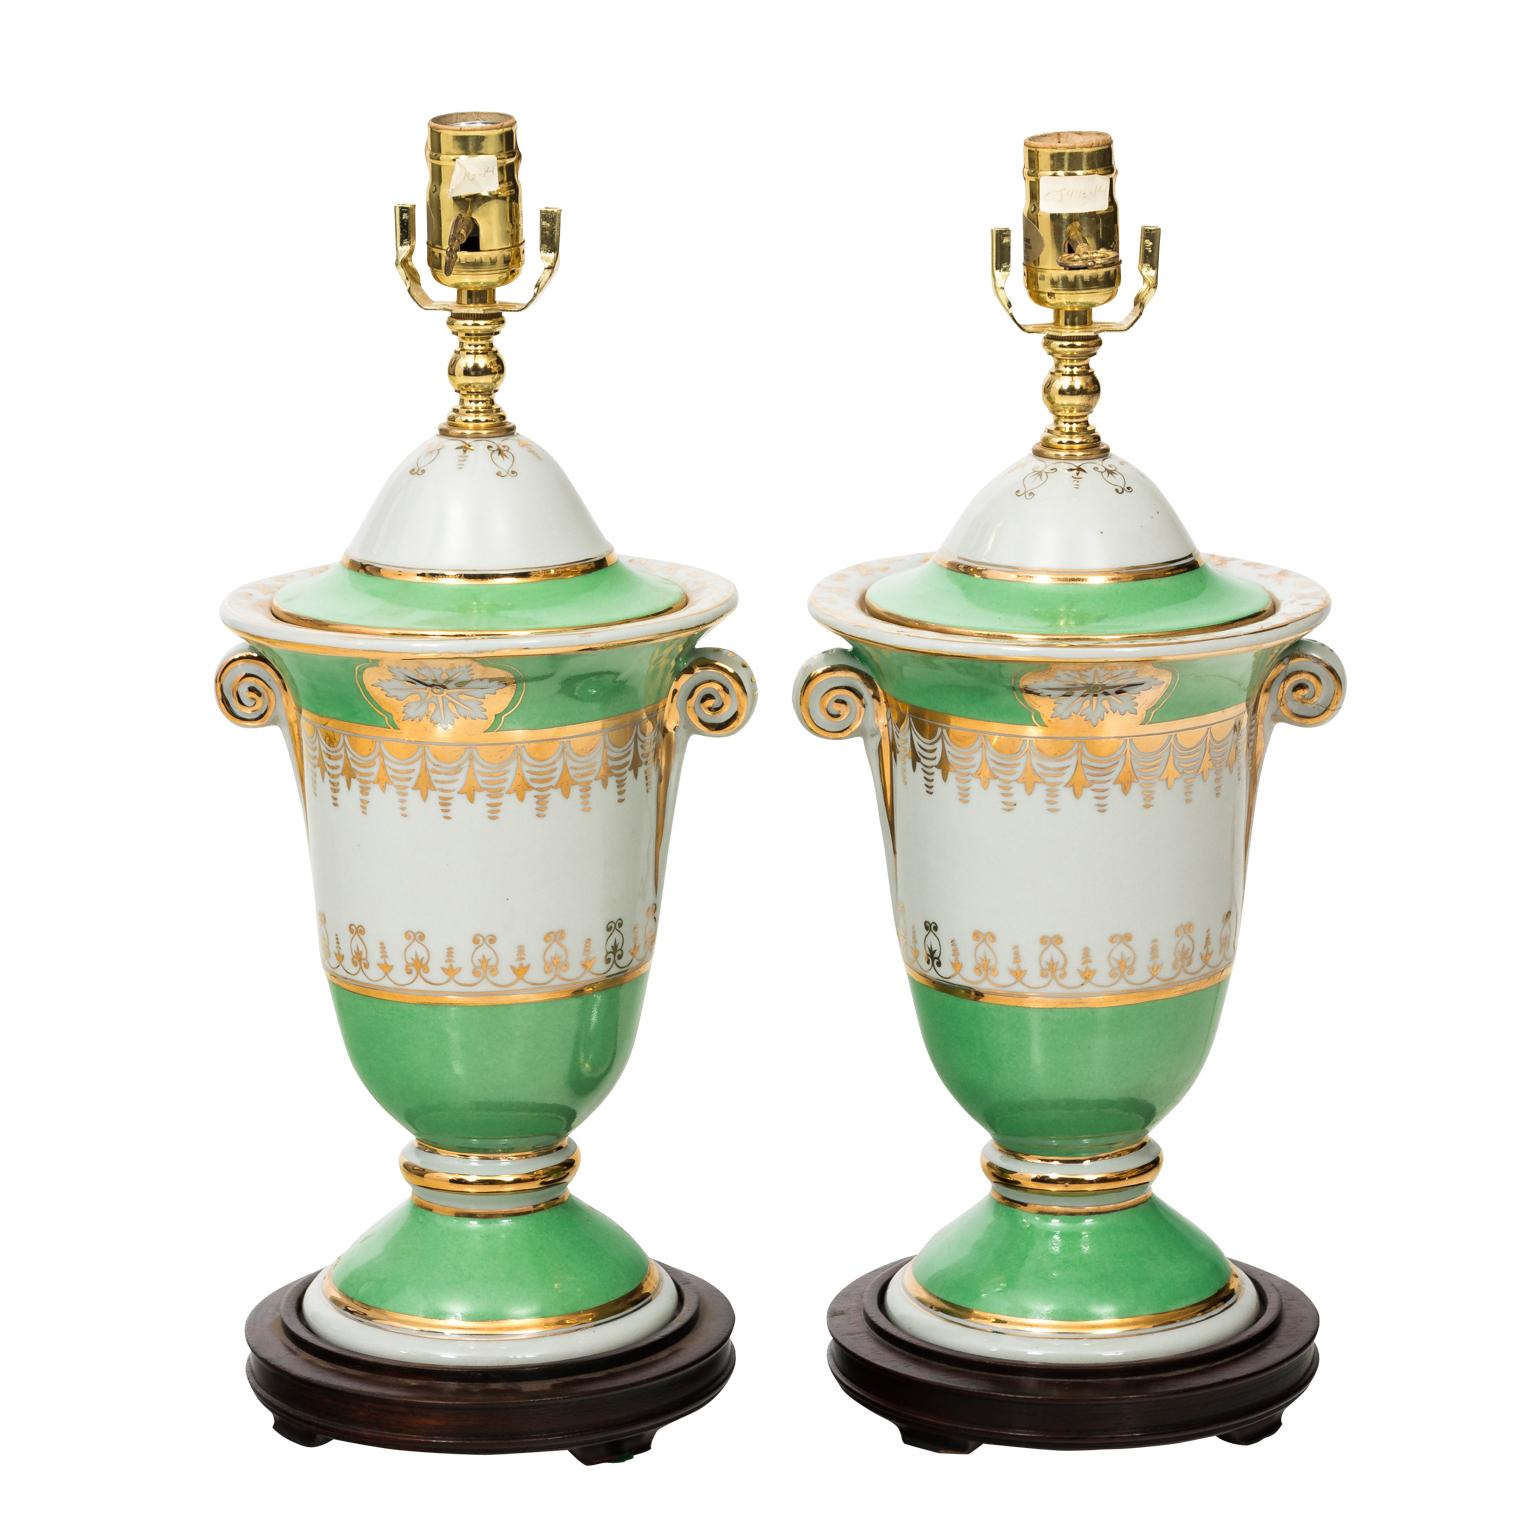 Pair of Neoclassical Style Ceramic Lamps